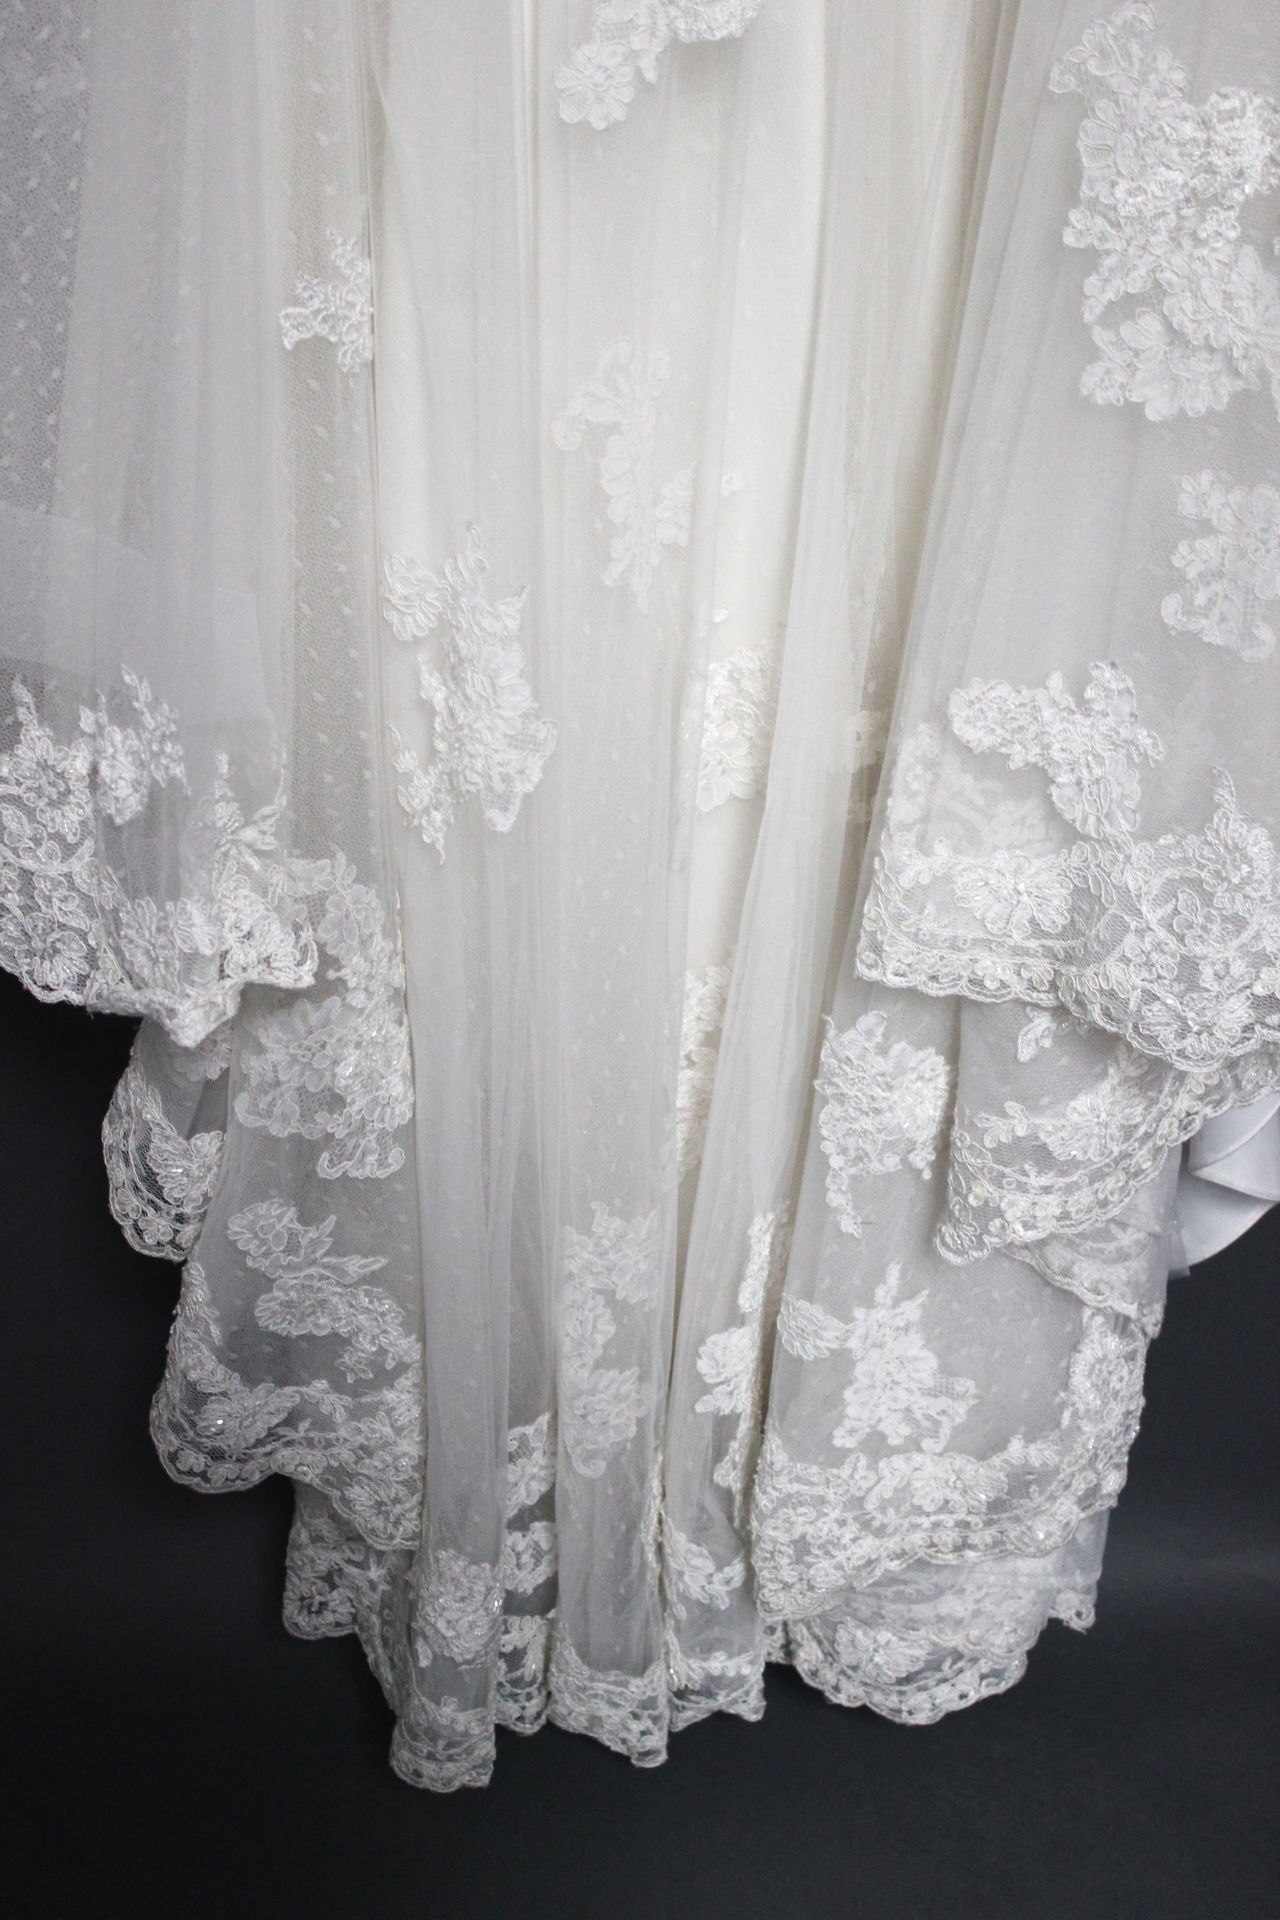 1 x ALAN HANNAH/LM 'Rachana' Strapless Lace And Beaded Designer Wedding Dress RRP £2,290 UK14 - Image 5 of 6